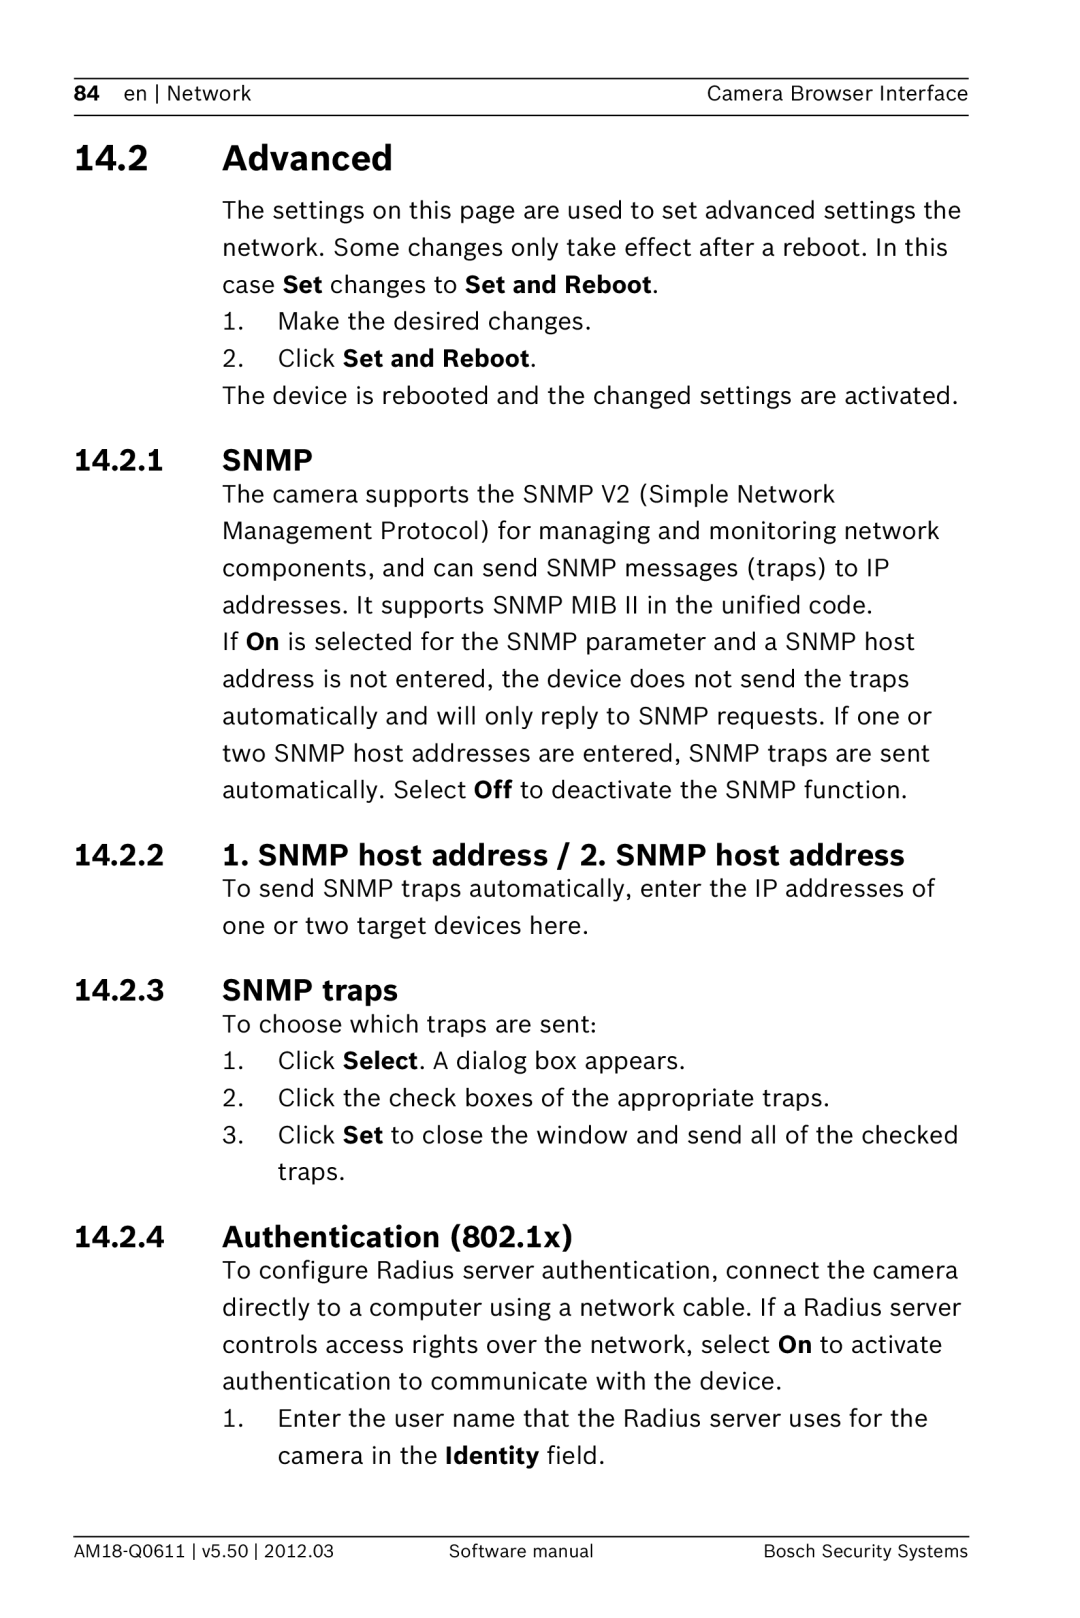 Bosch Appliances FW5.50 14.2Advanced, 14.2.1SNMP, SNMP host address / 2. SNMP host address, 14.2.3SNMP traps 